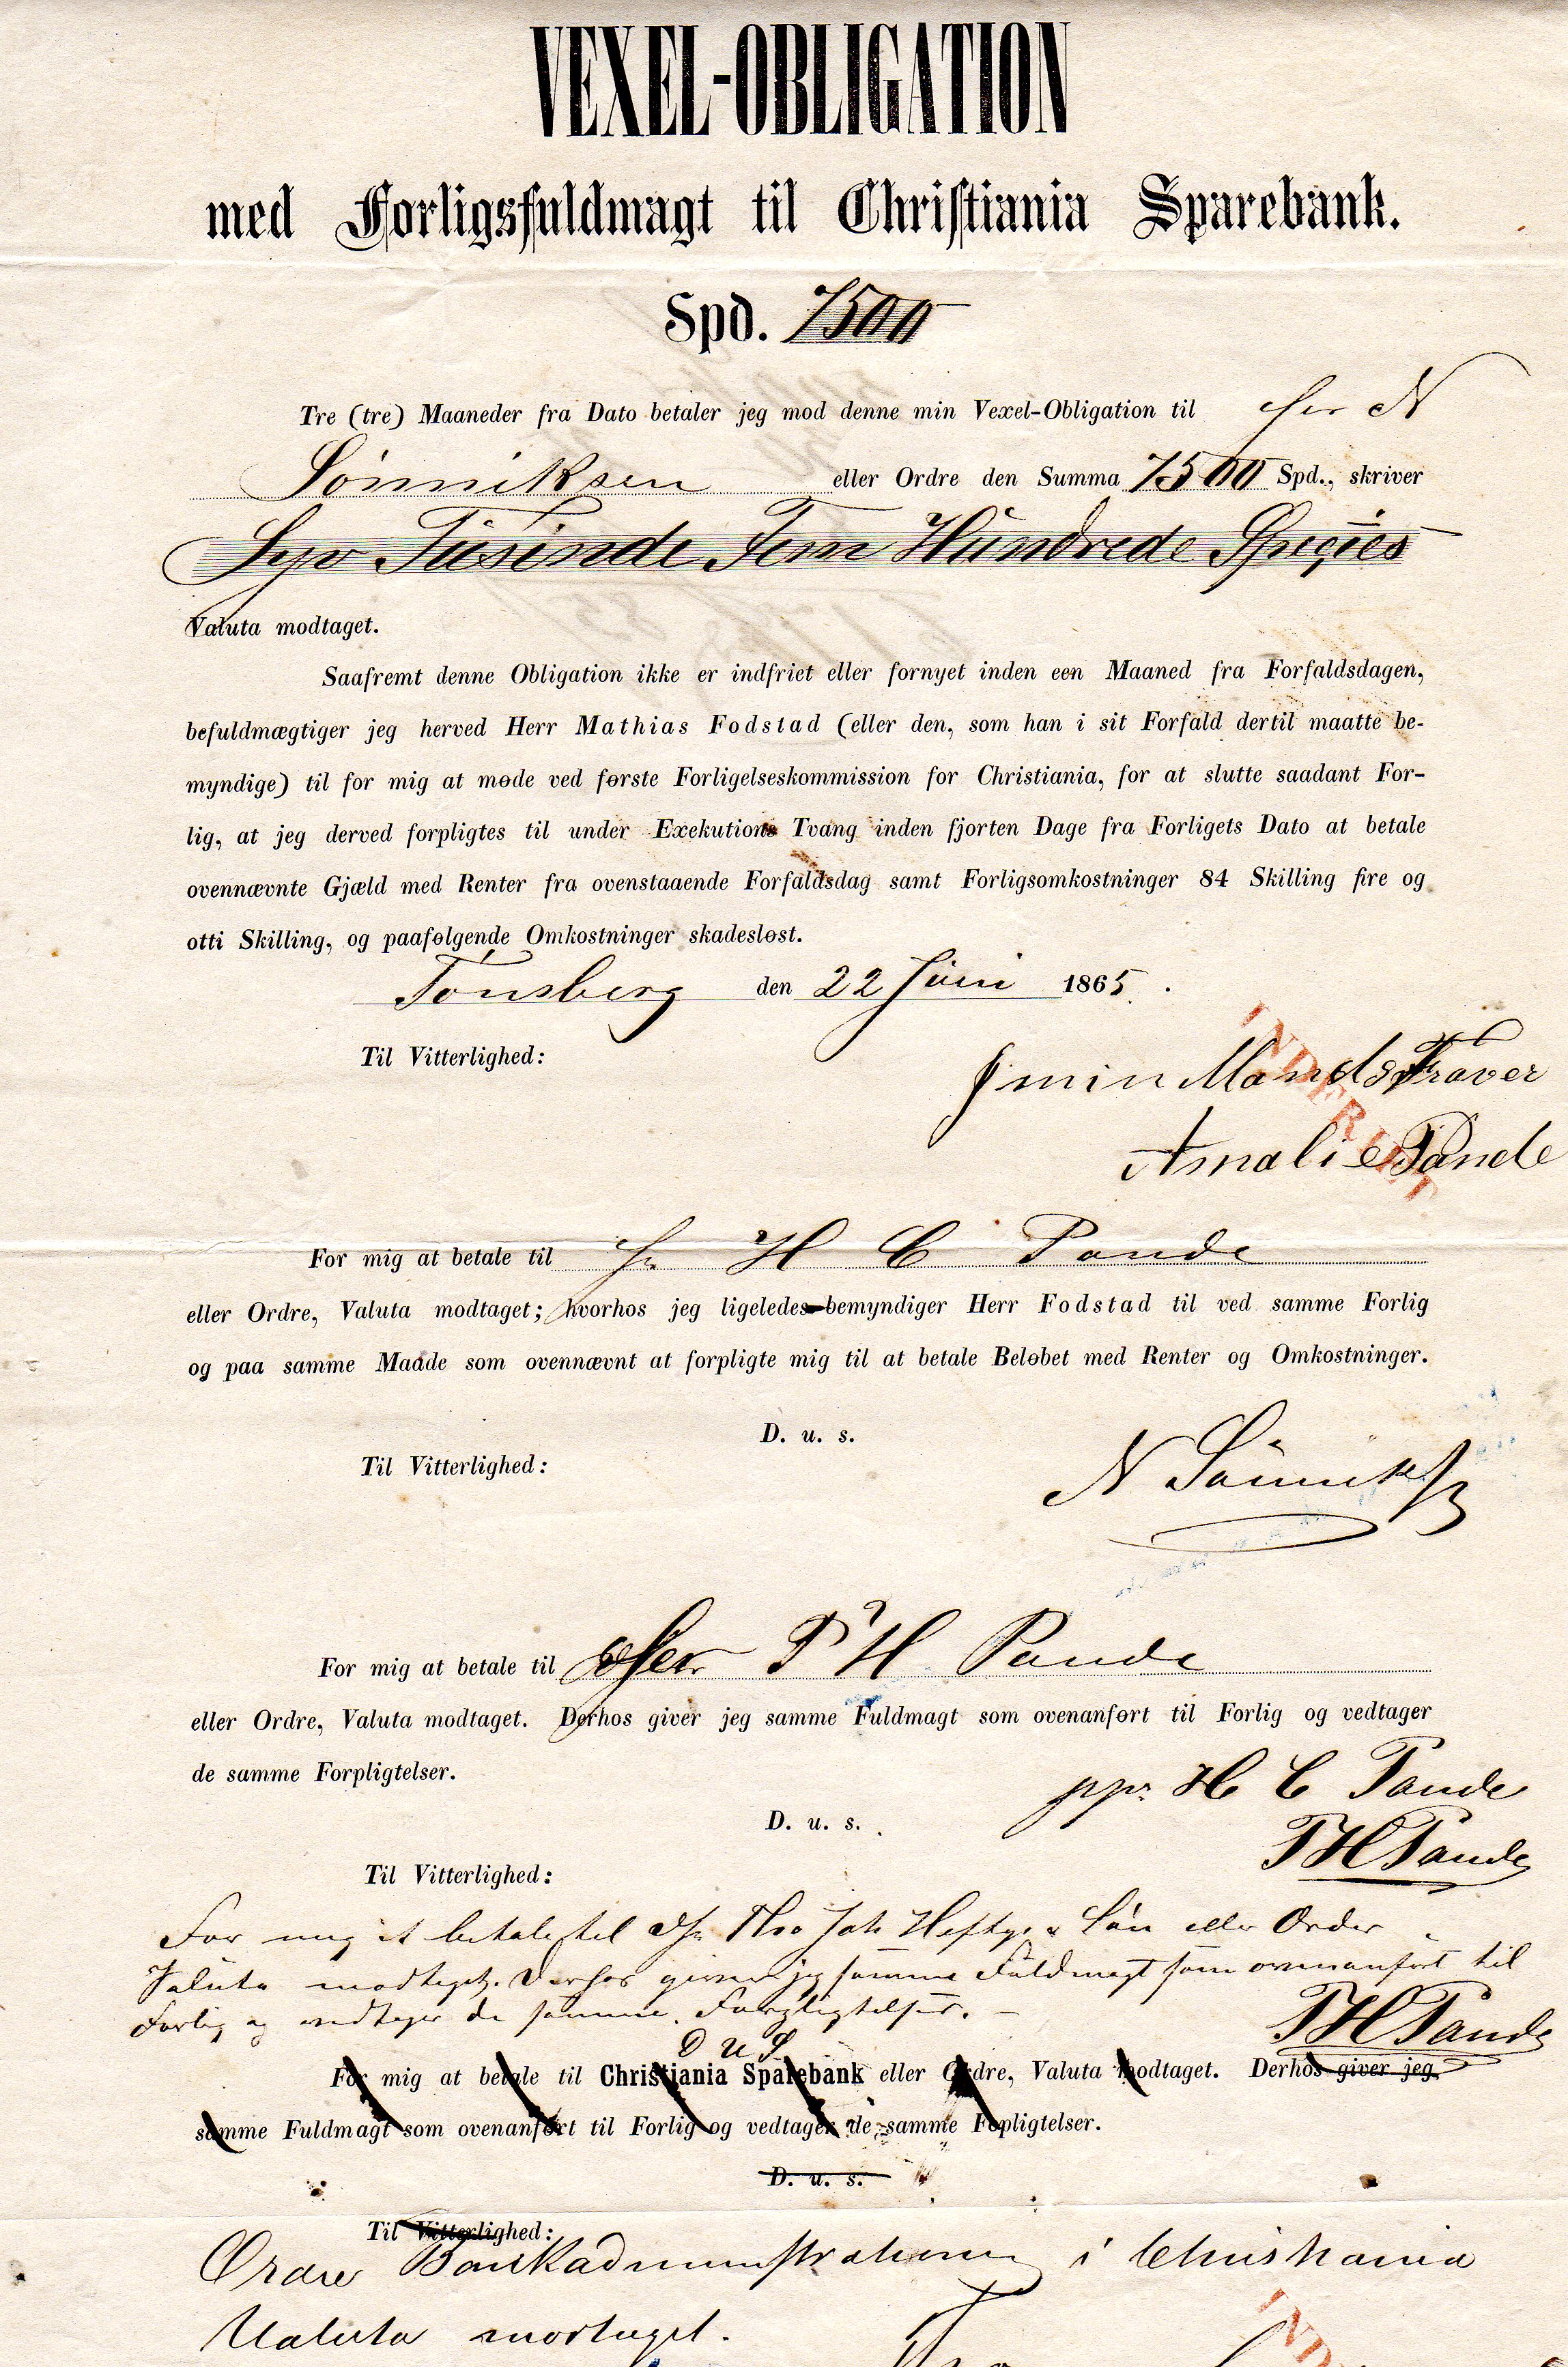 Vexel-obligation med forligsfuldmagt til Christiania Sparebank  Spd 1500 no 500 Tønsberg 1865